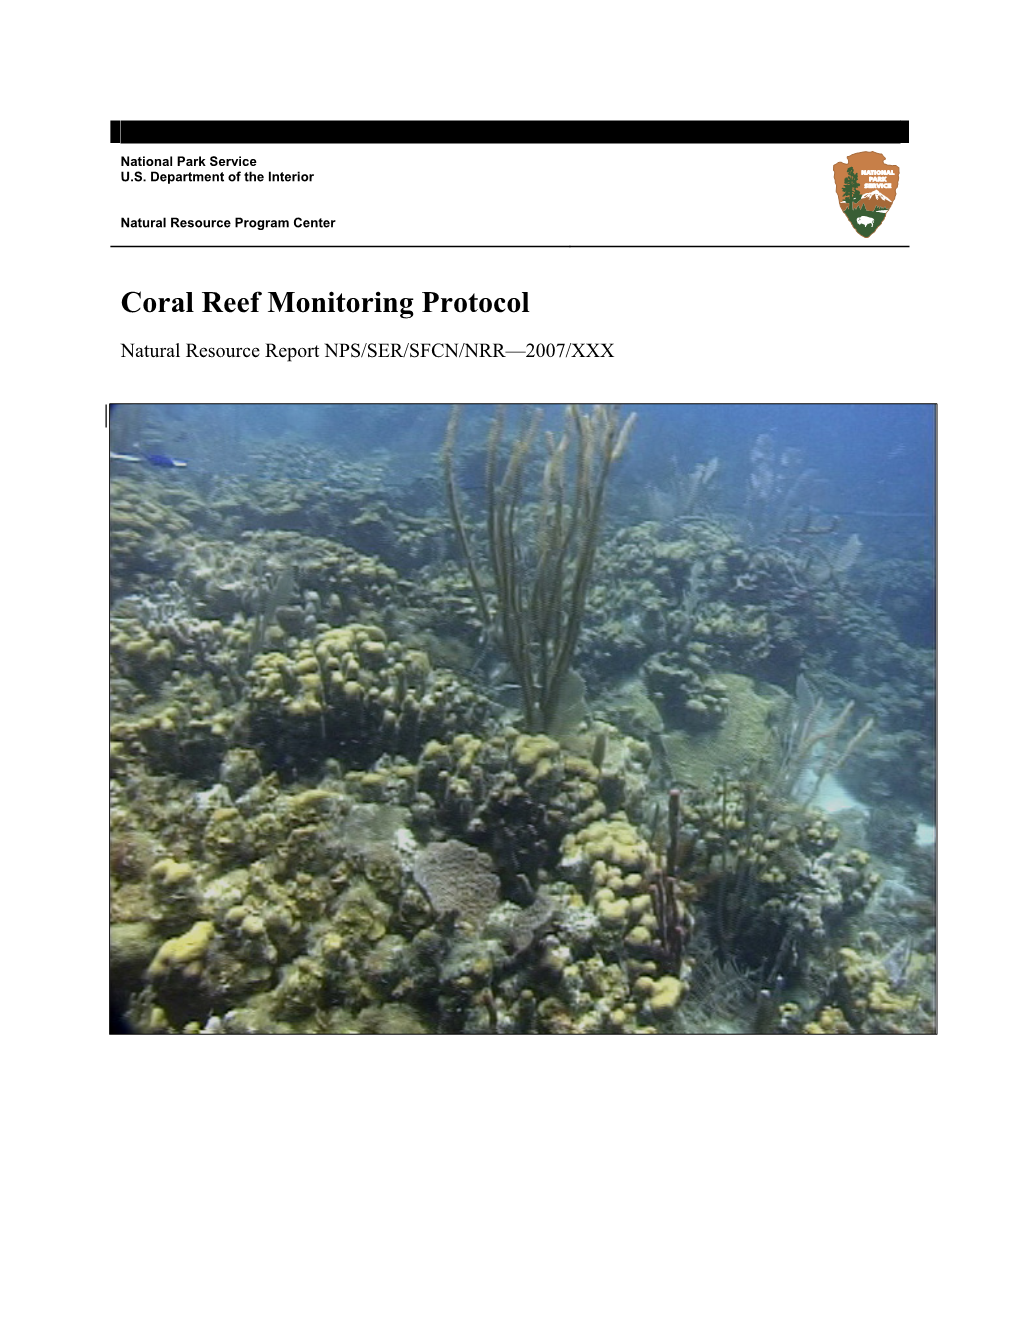 Coral Reef Monitoring Protocol